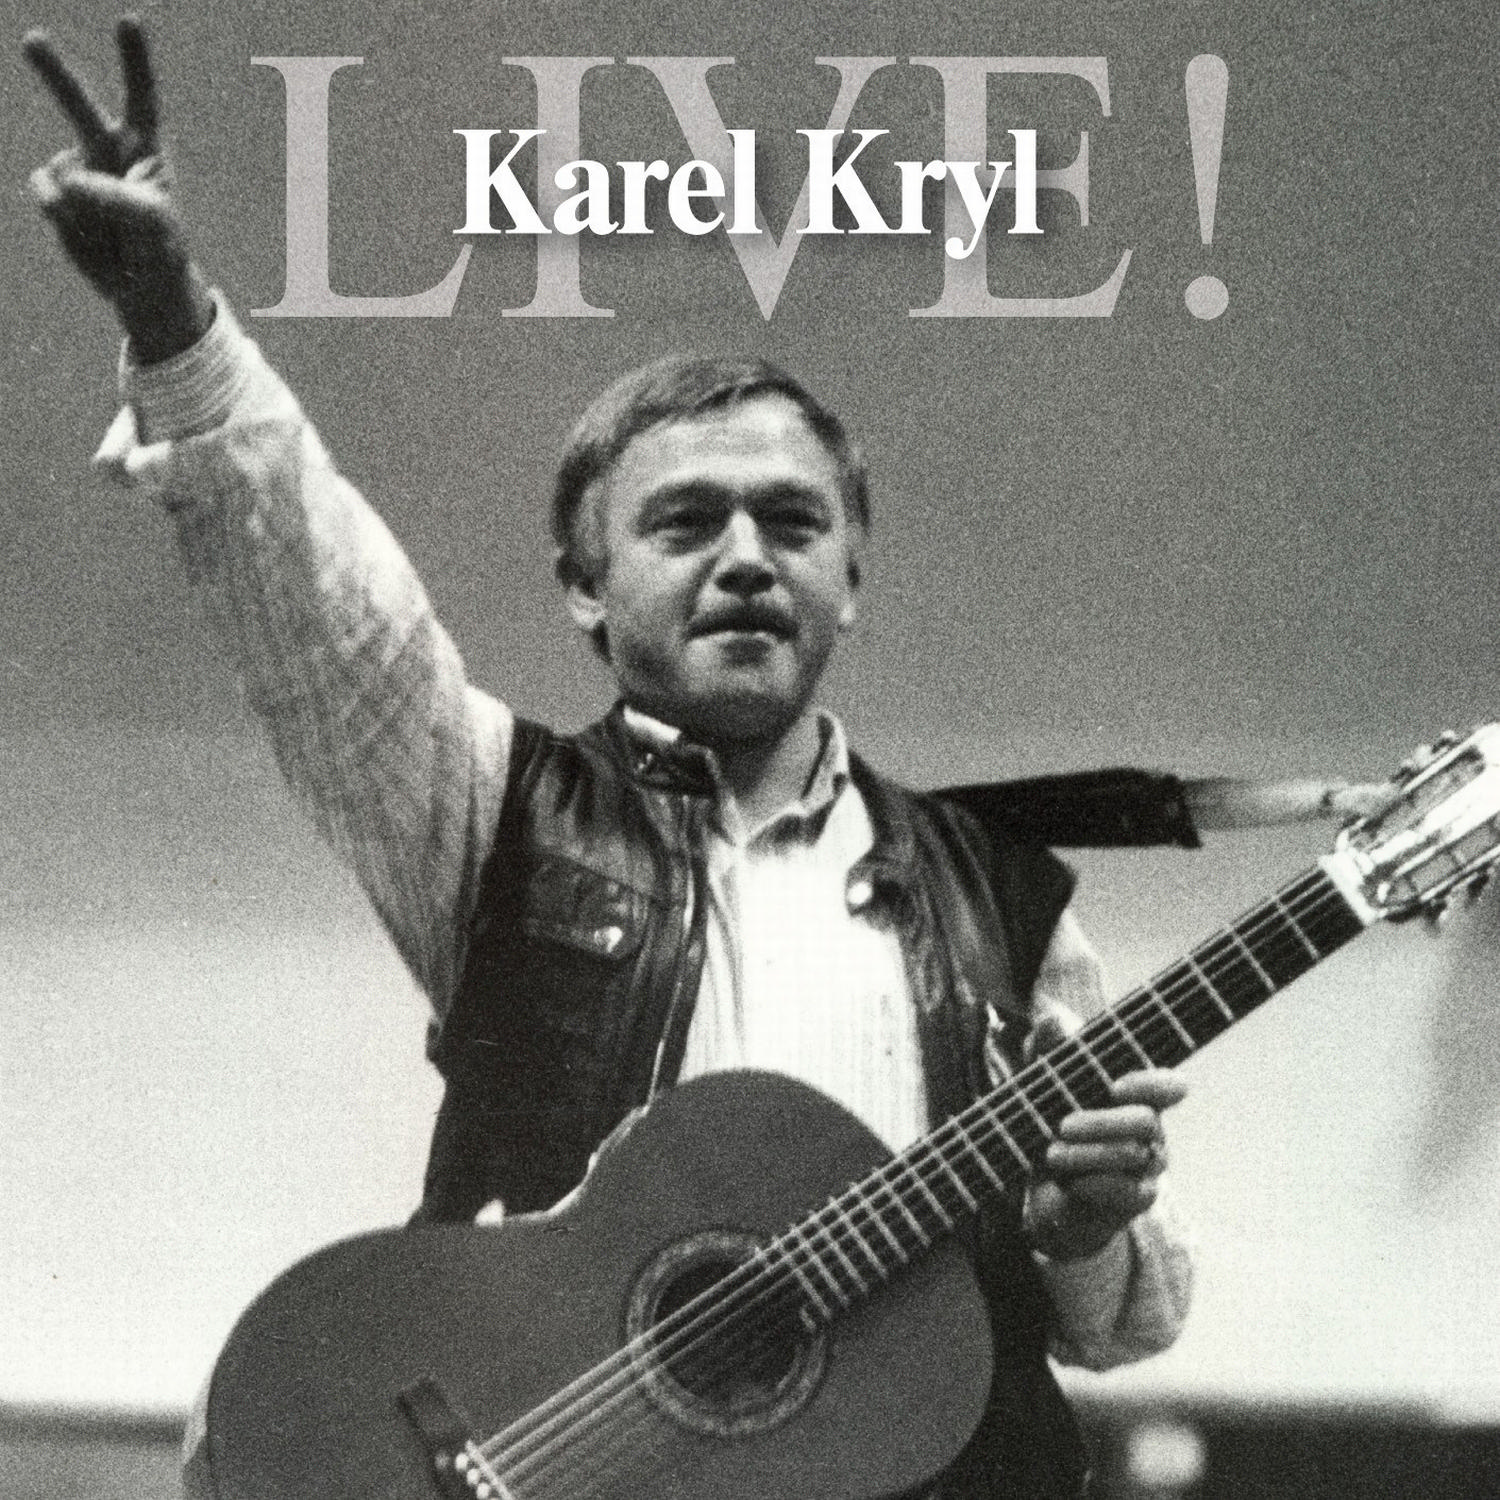 CD Shop - KRYL KAREL LIVE!